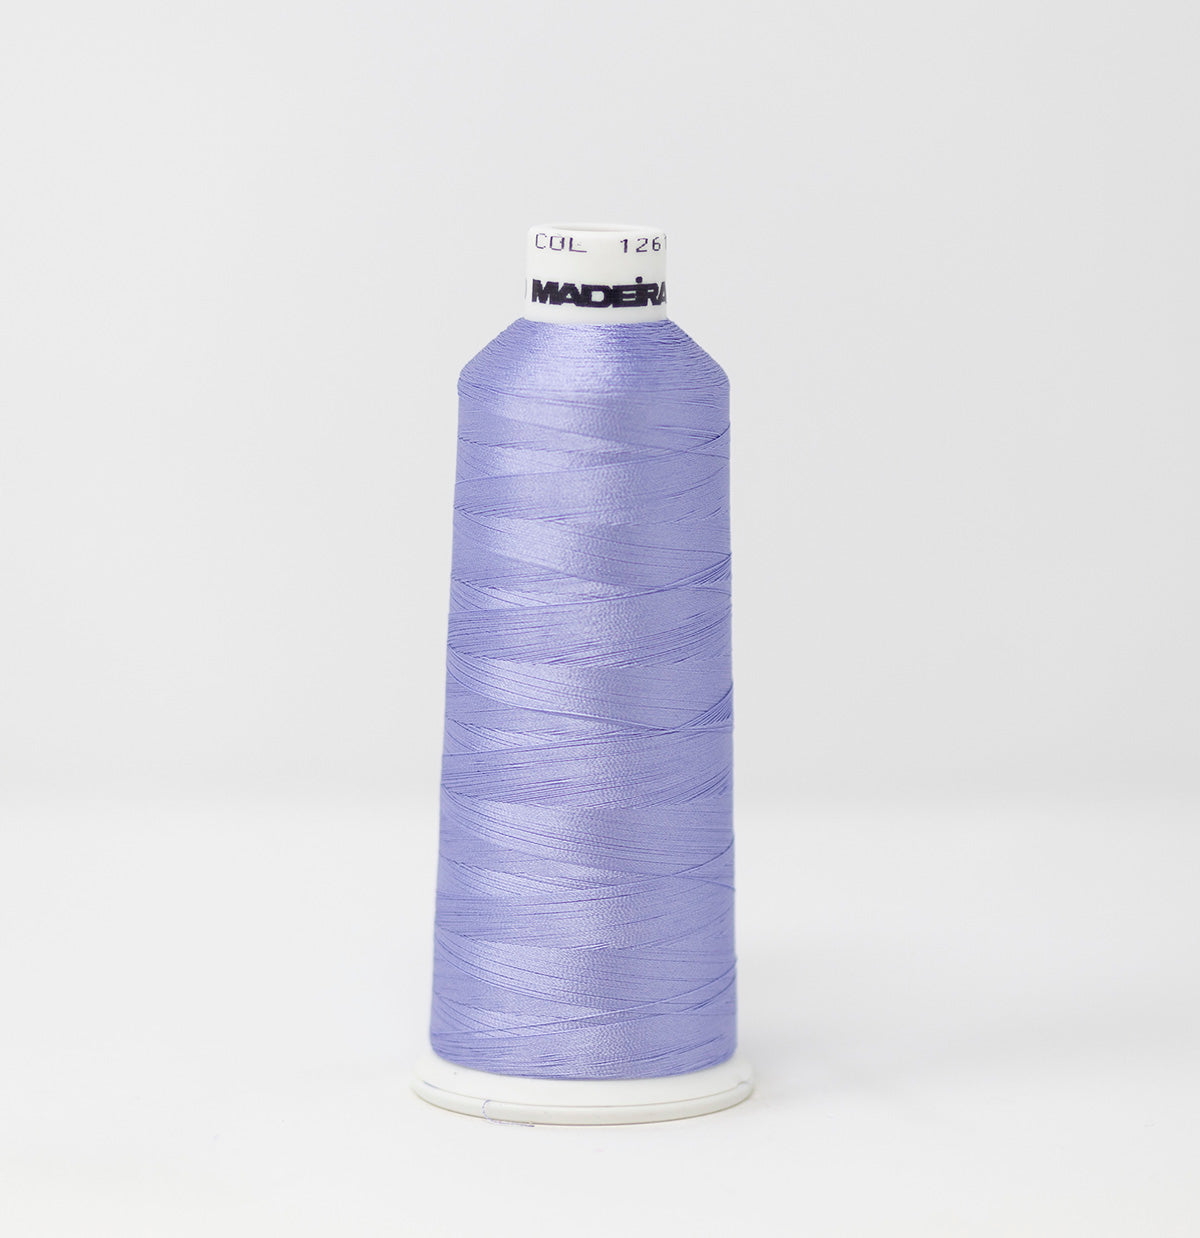 Madeira #910-1261 5,500 yard cone of #40 weight Lavendula Purple Rayon machine embroidery thread